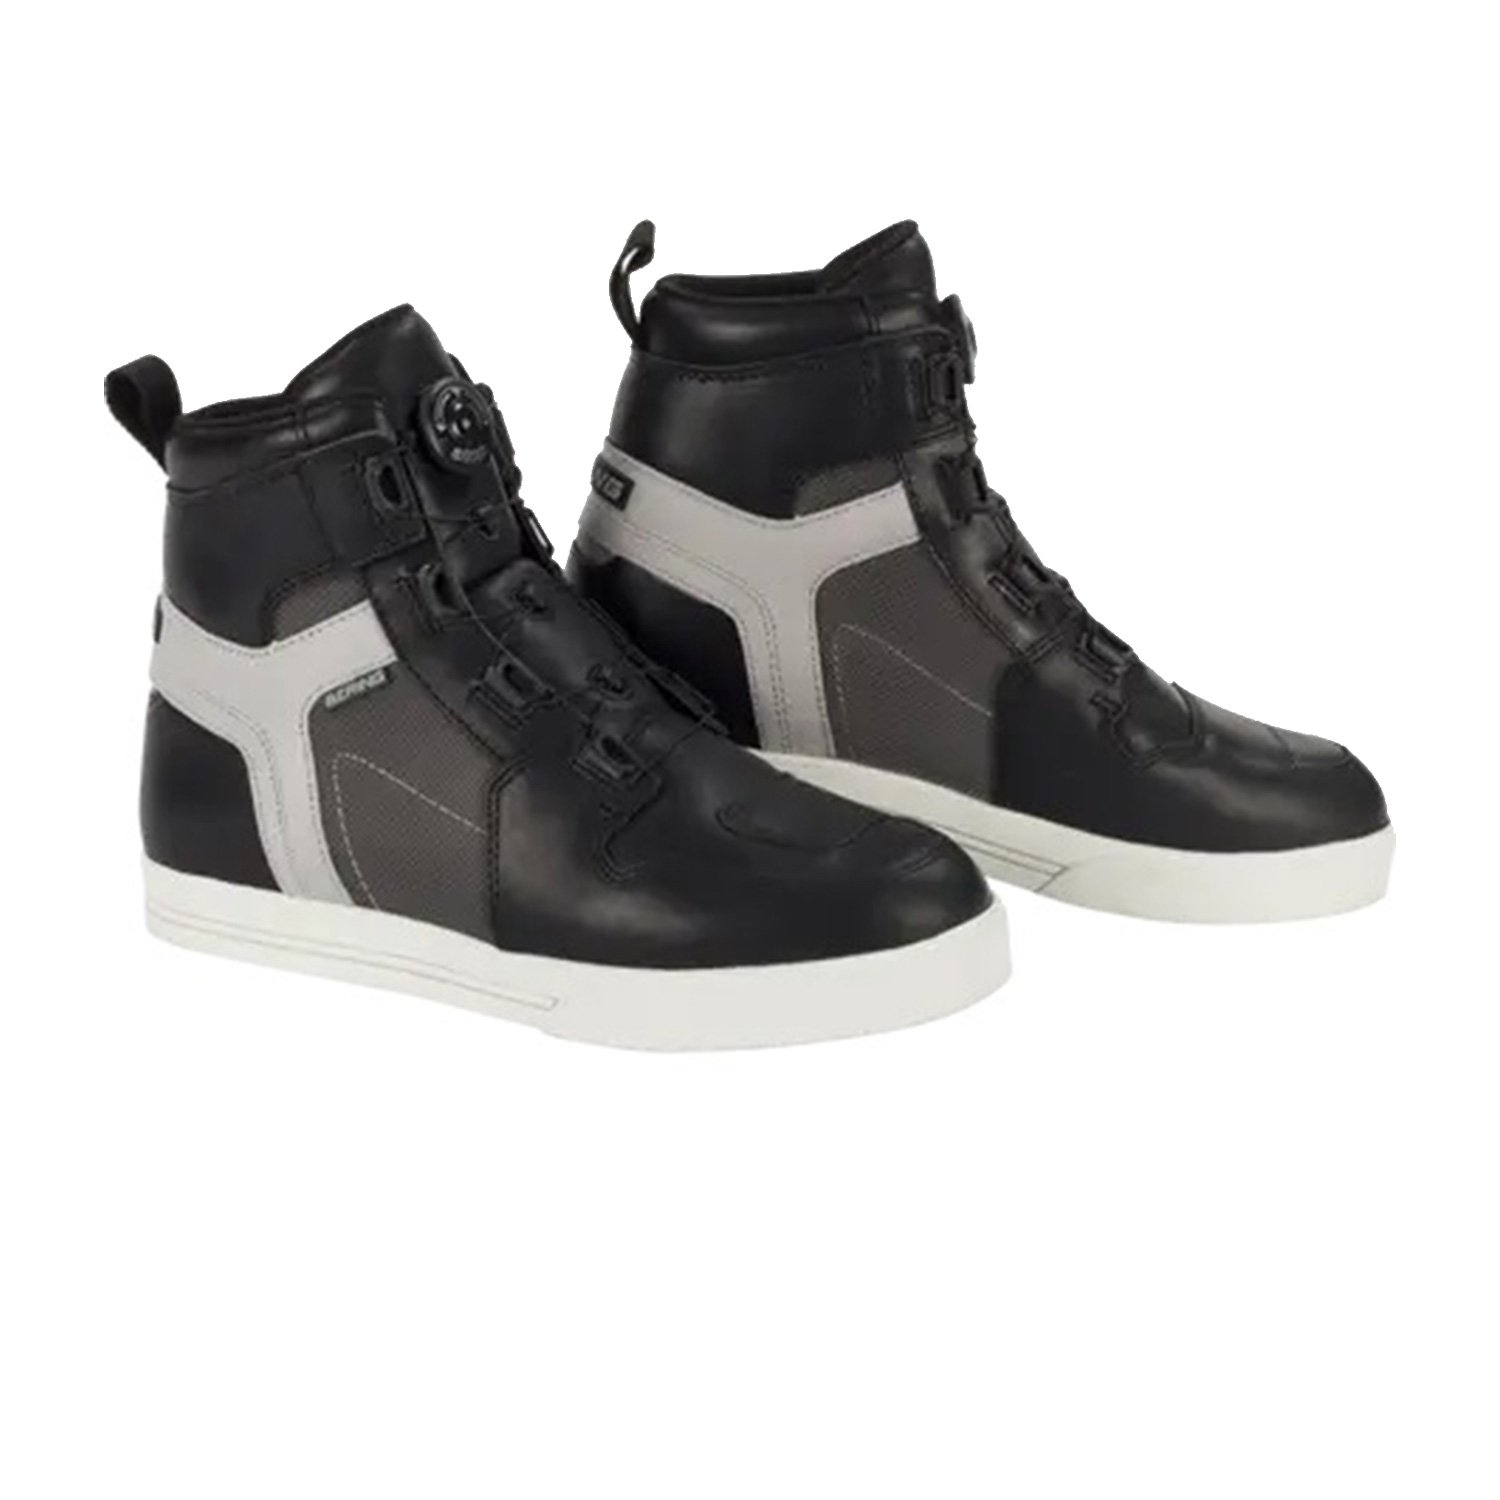 Image of Bering Sneakers Reflex Vented Black Grey Size 44 EN